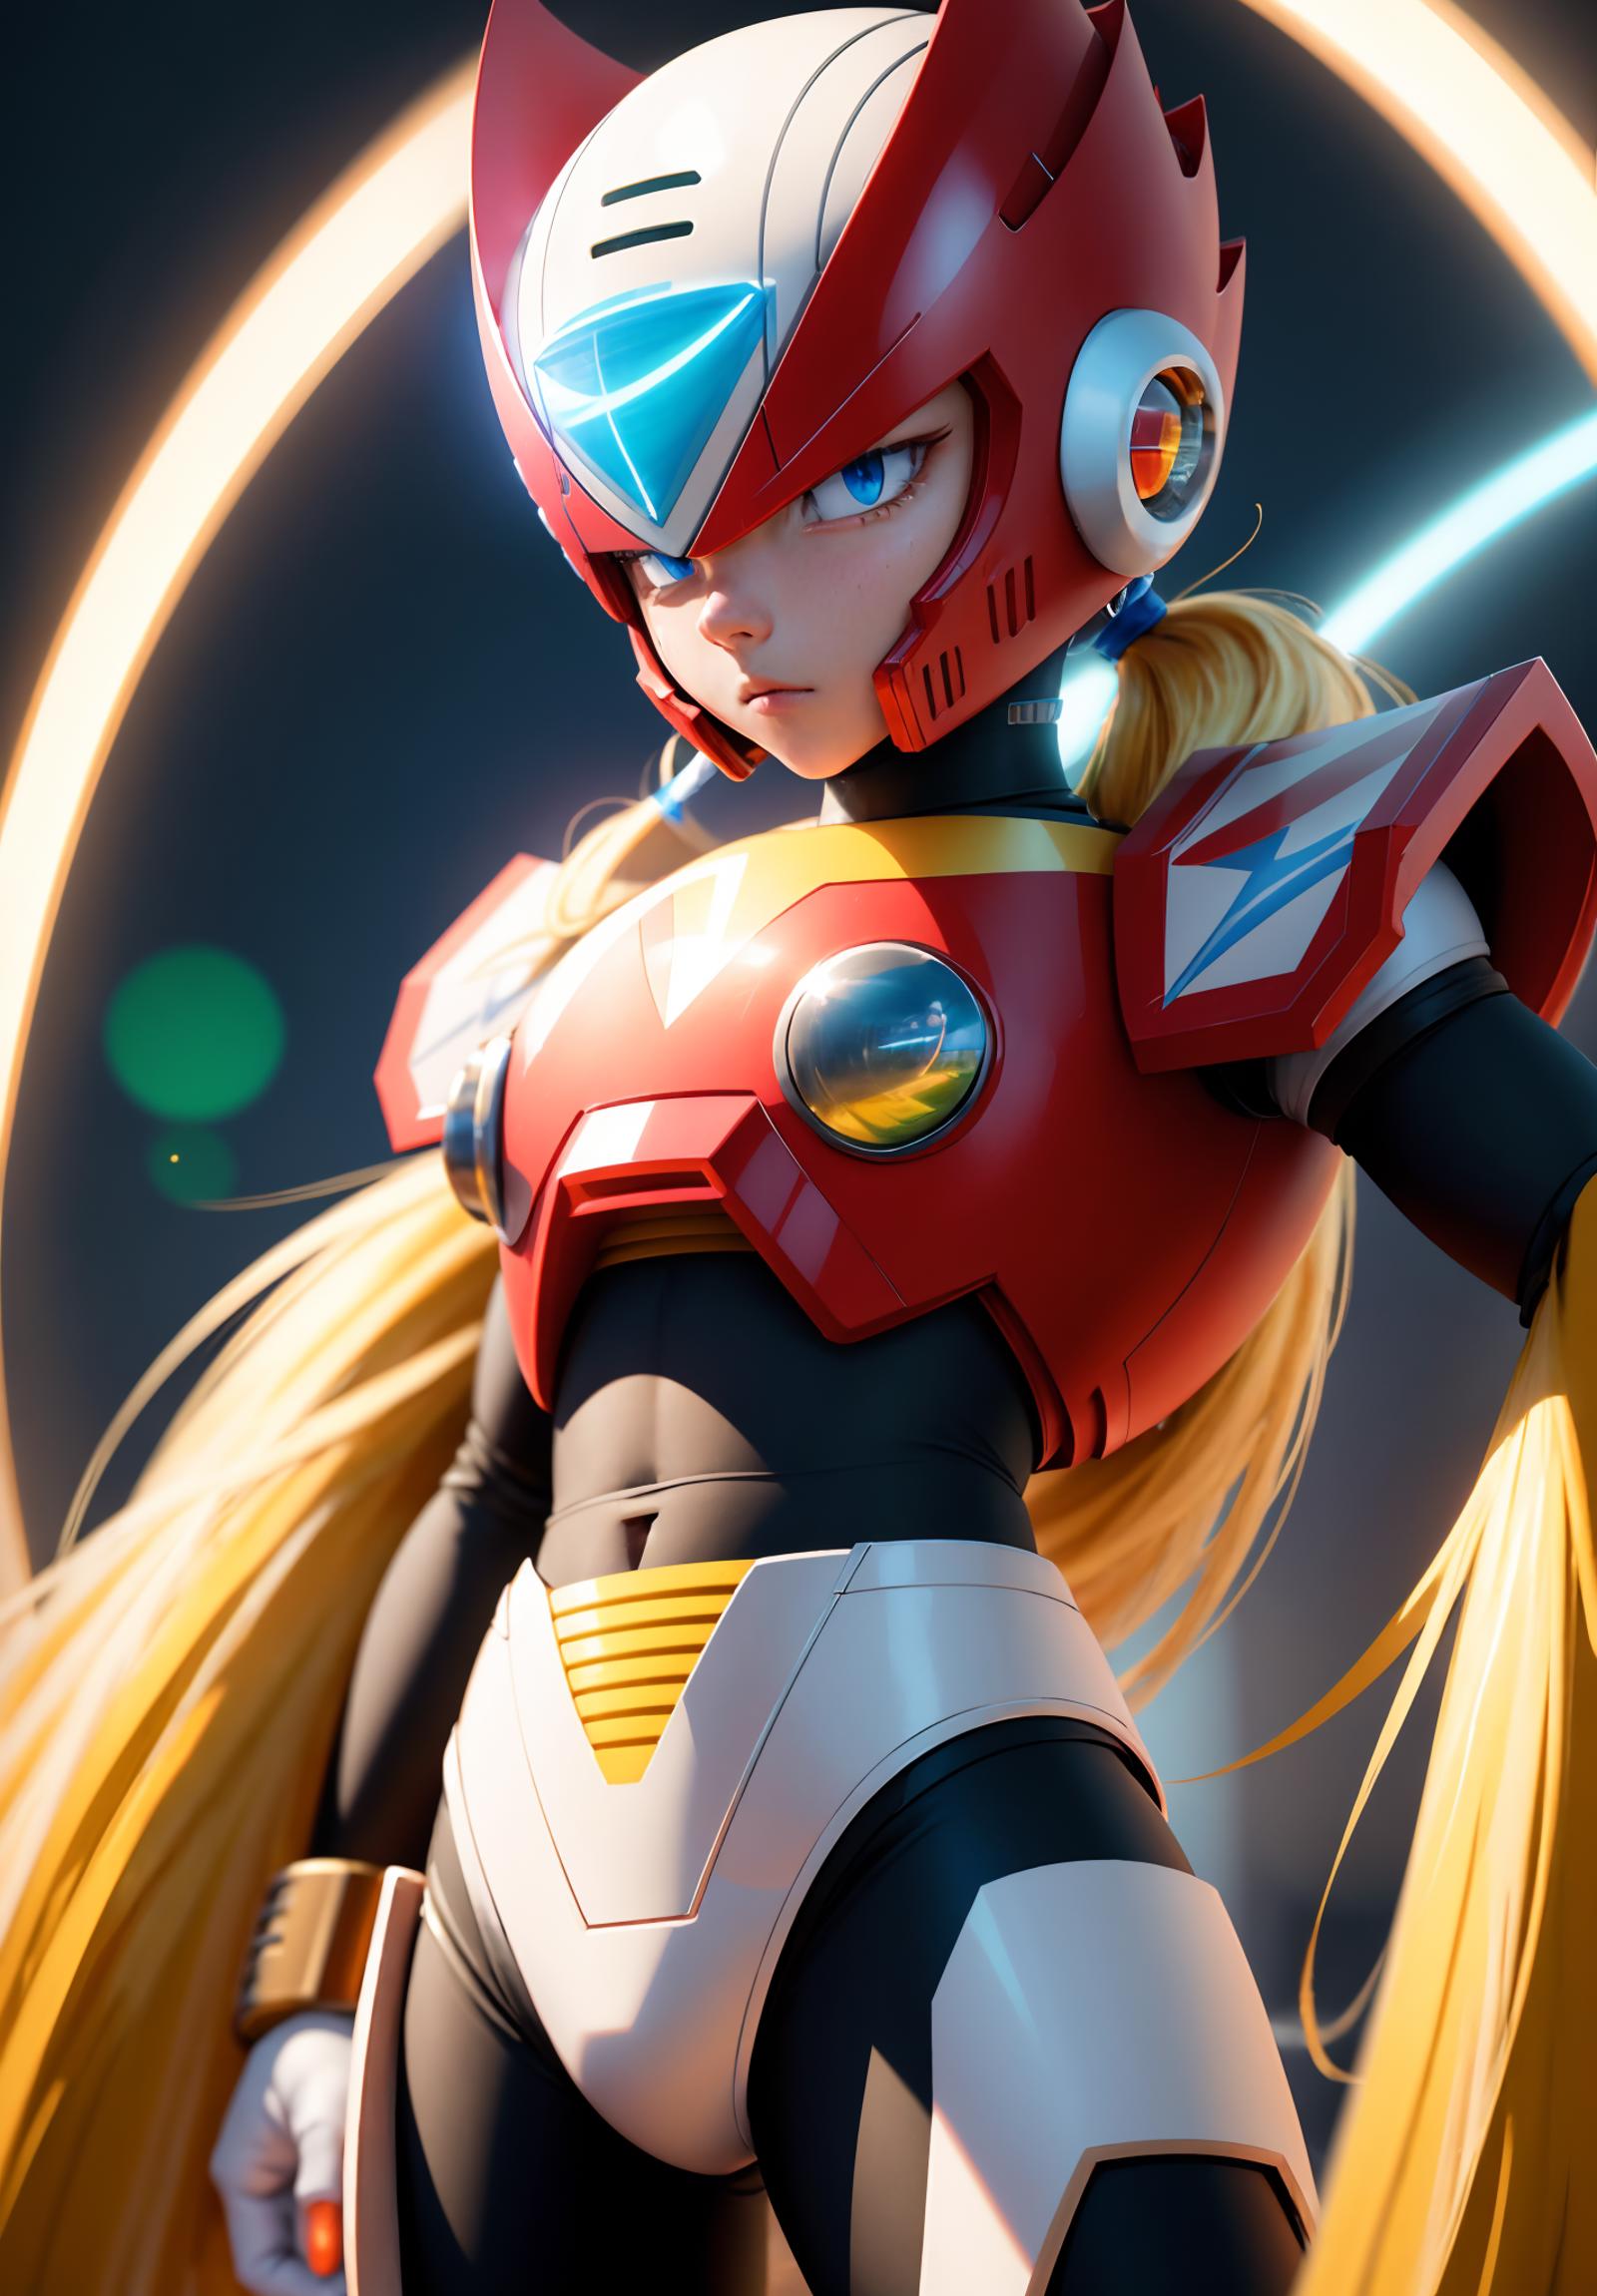 Zero (Mega Man X) image by smoonHacker